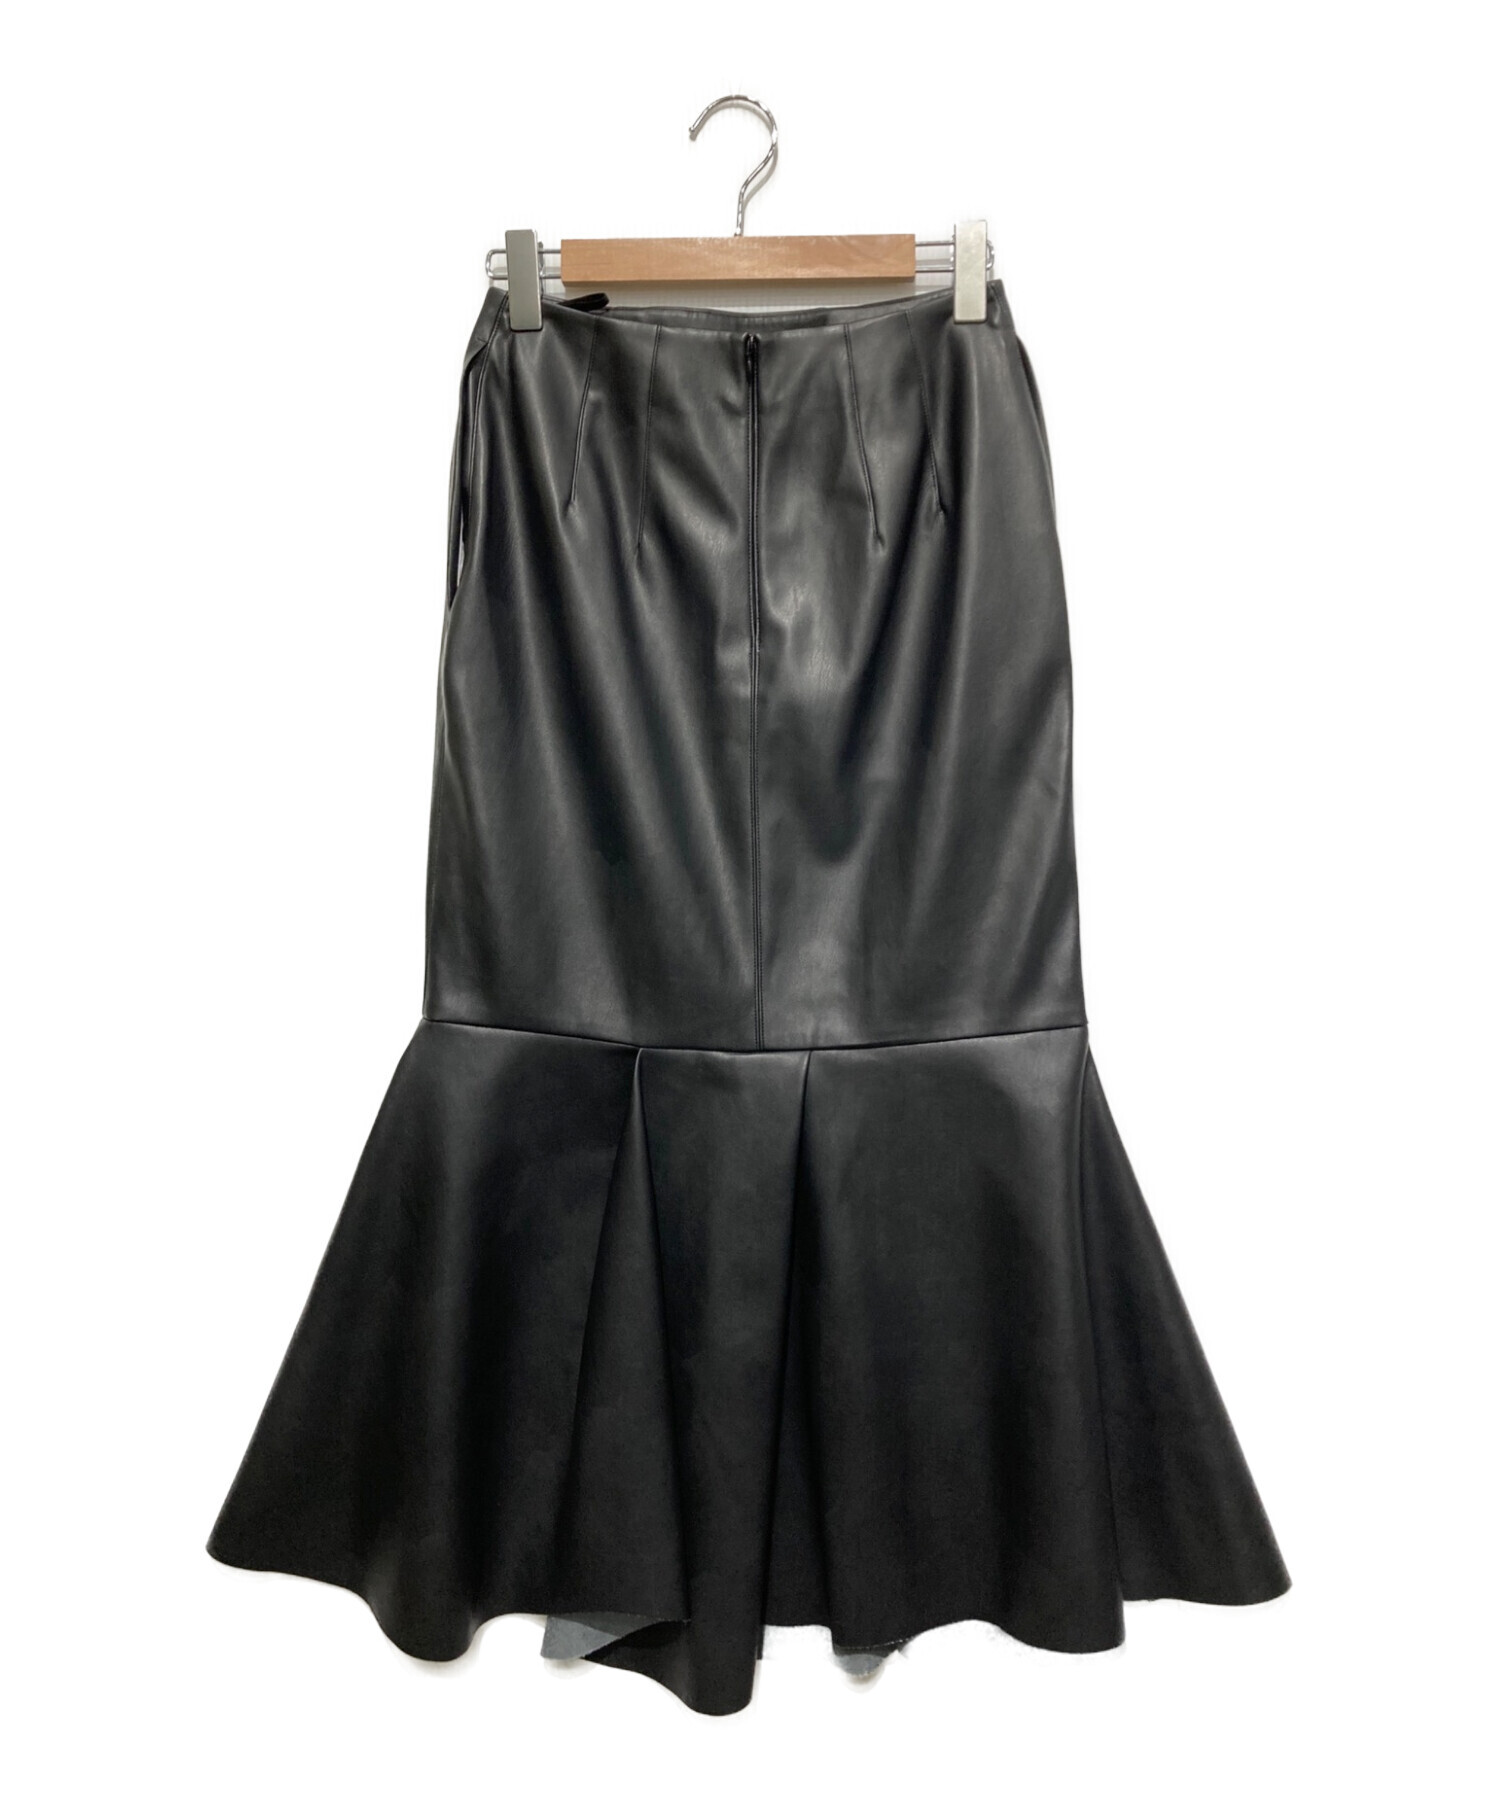 ENFOLD (エンフォルド) シンセティックレザーペプラムスカート ブラック サイズ:SIZE 38